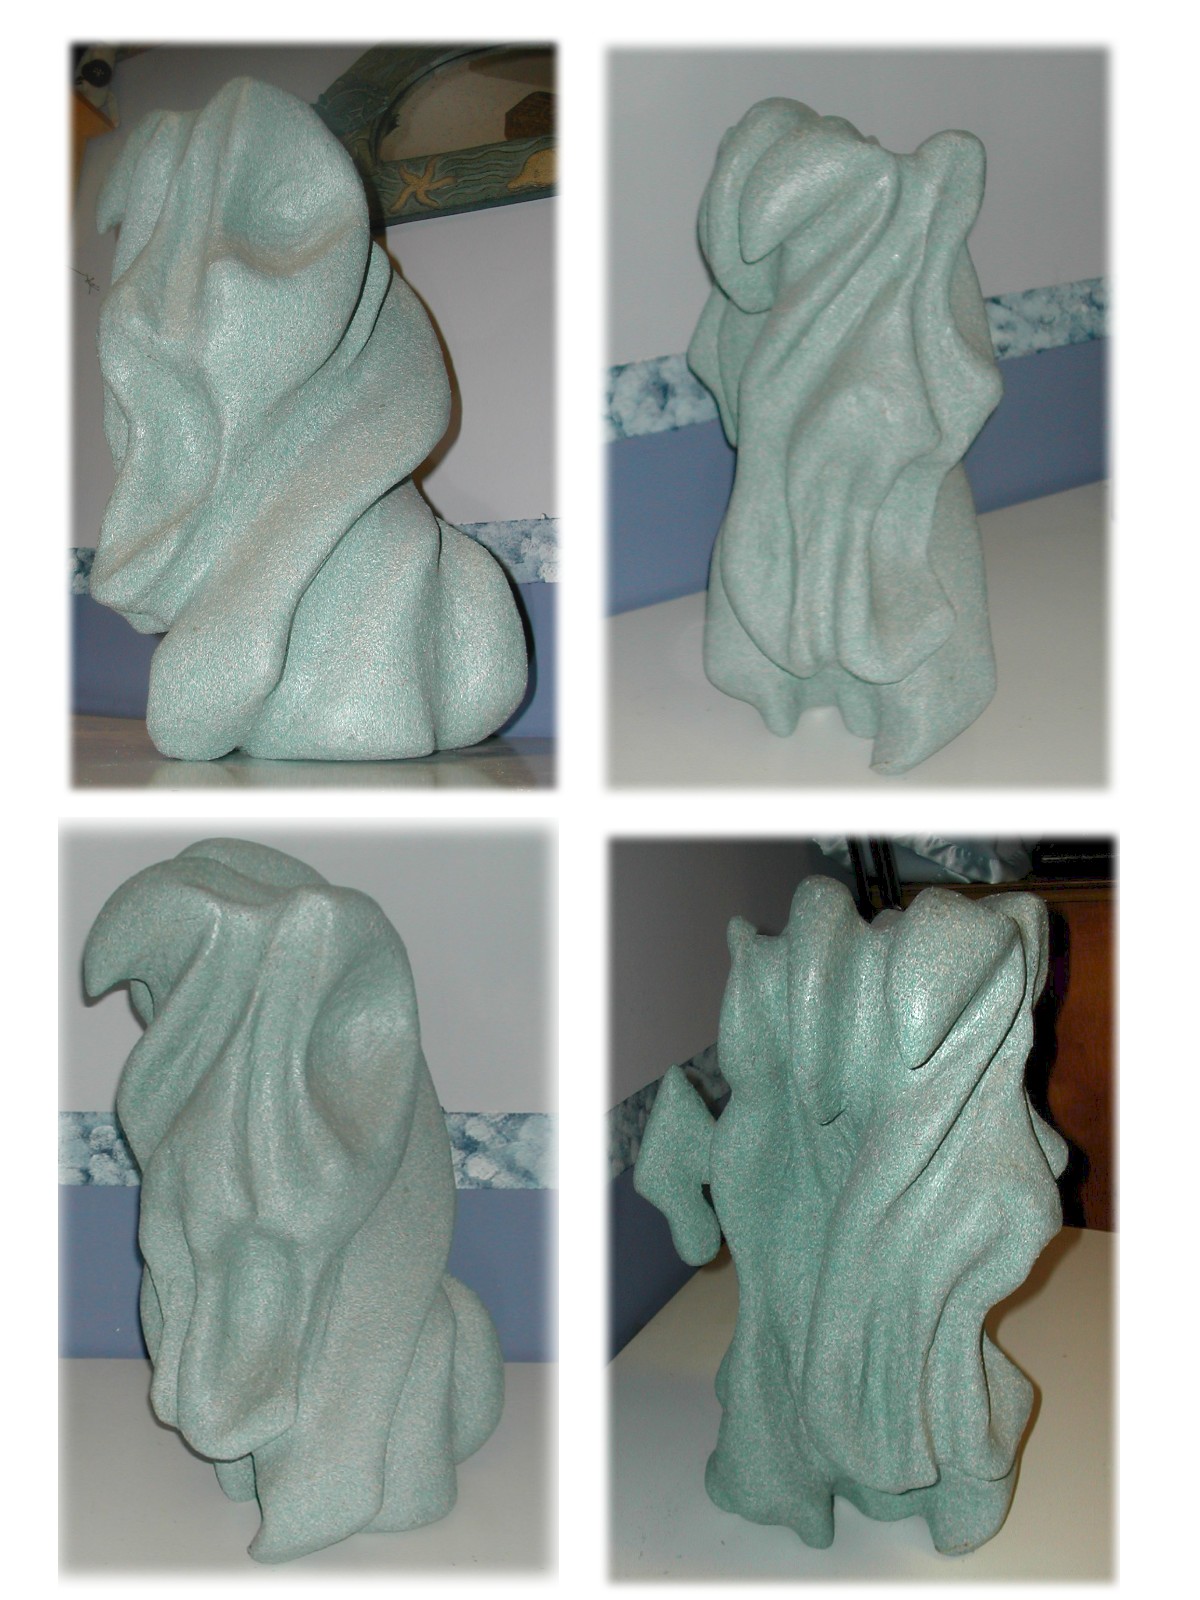 Styrofoam Blocks - The Compleat Sculptor